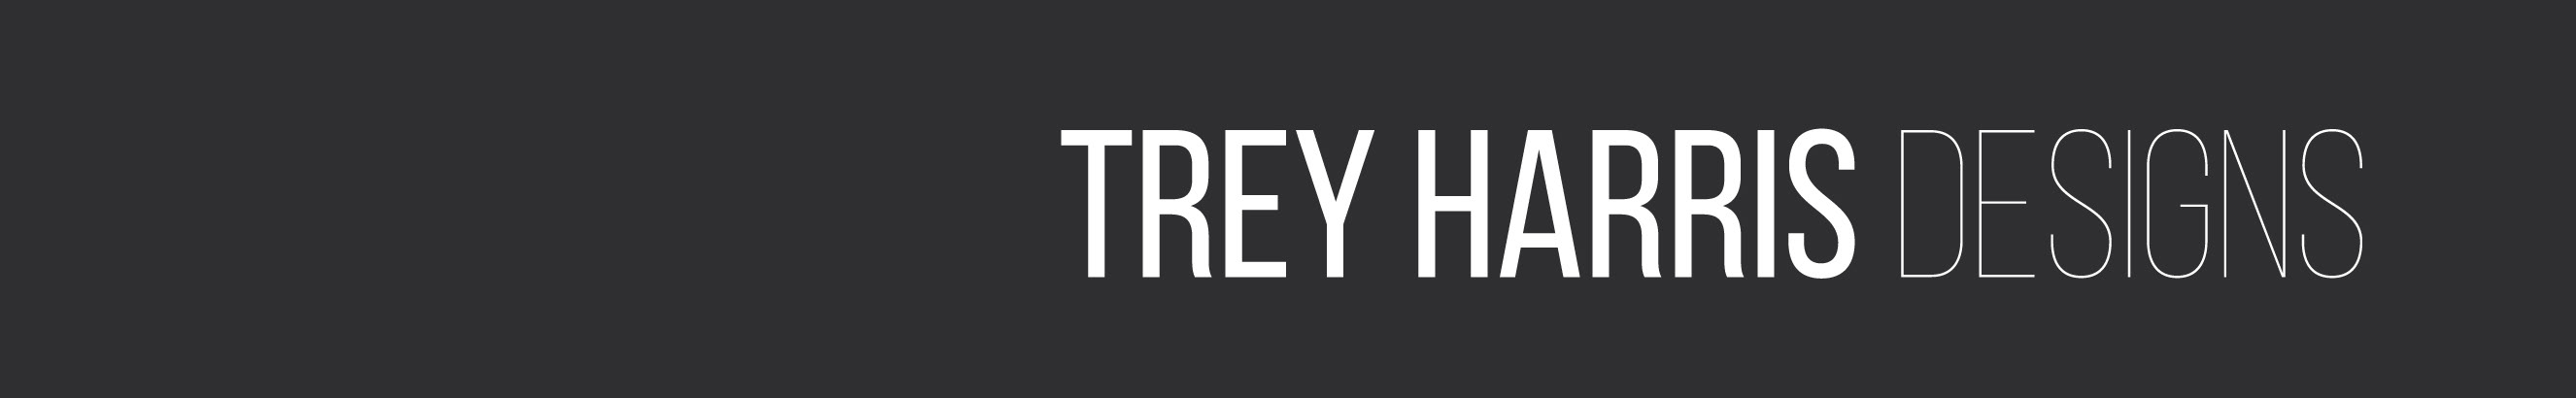 Trey Harriss profilbanner